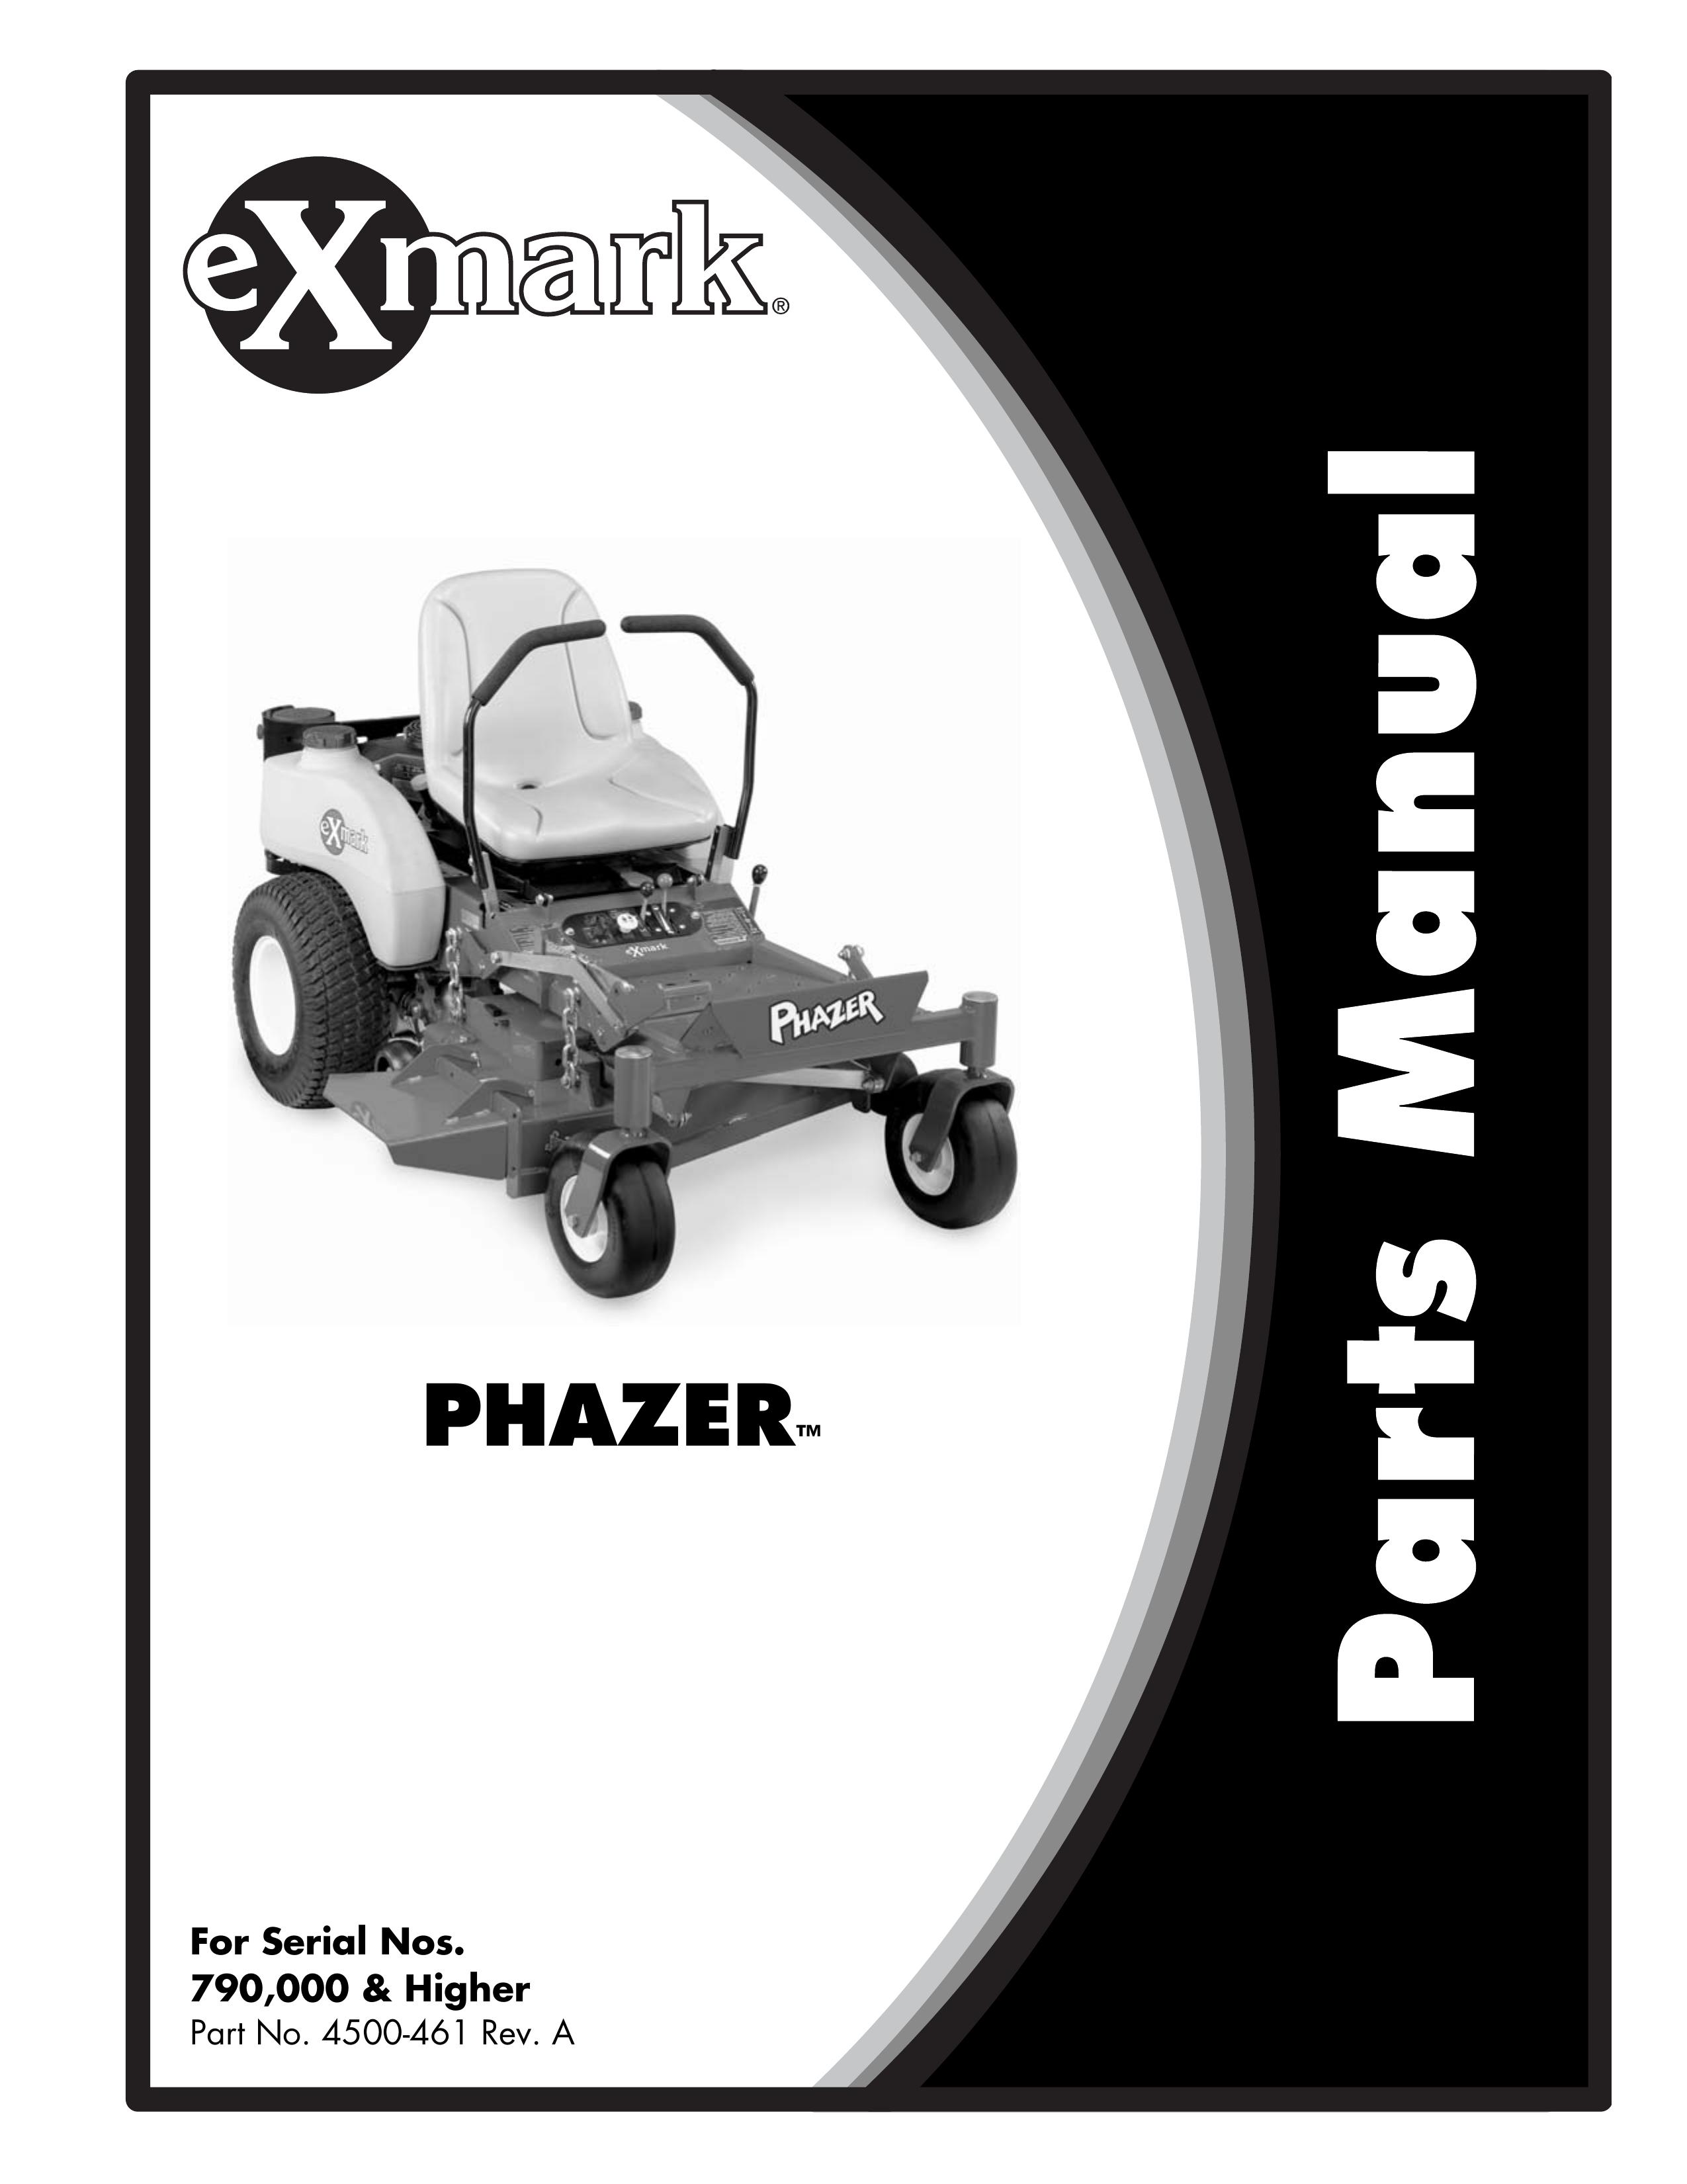 Exmark 4500-461 Lawn Mower User Manual